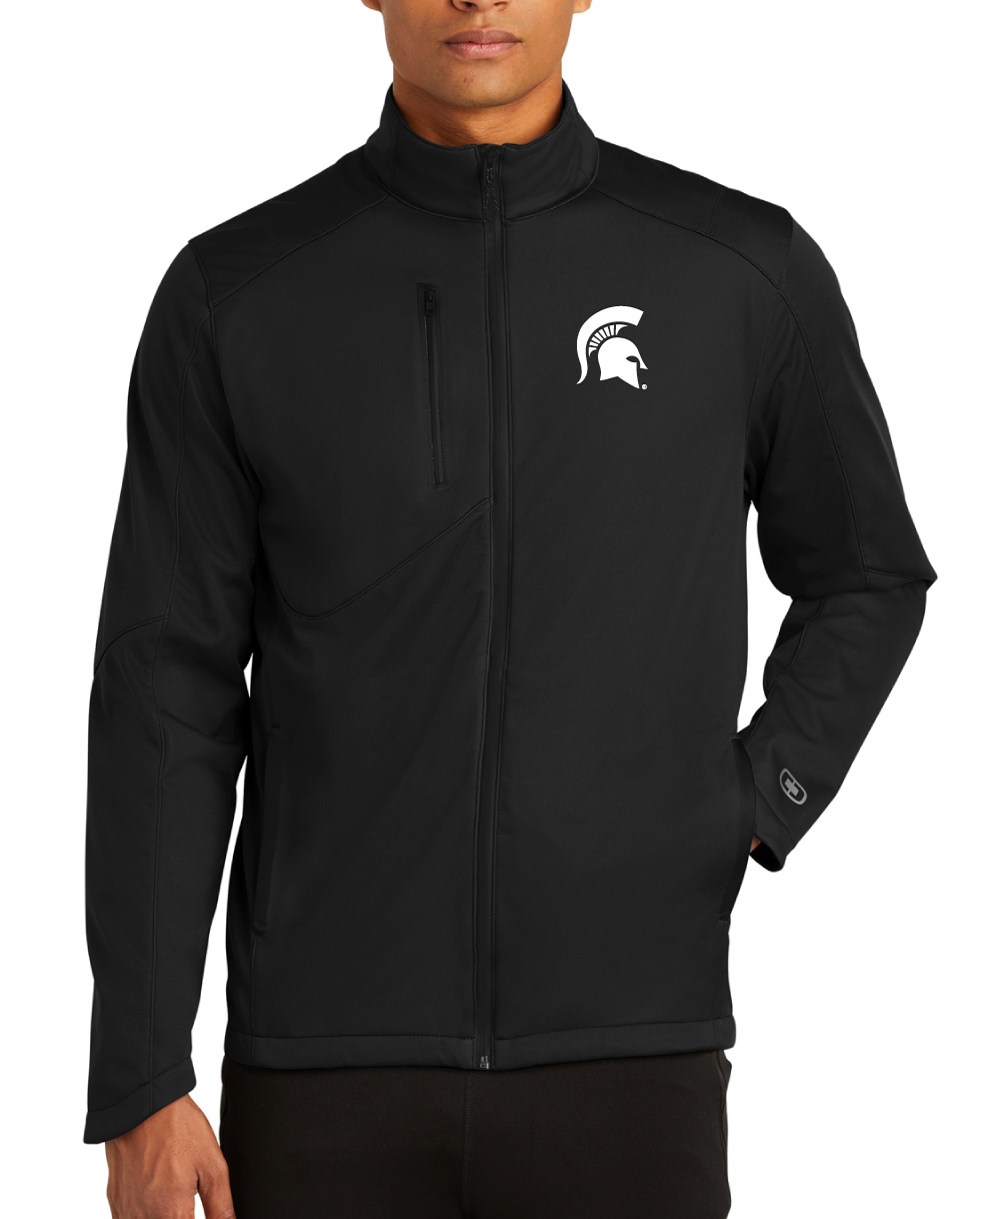 Michigan State Jacket with Spartan helmet Logo